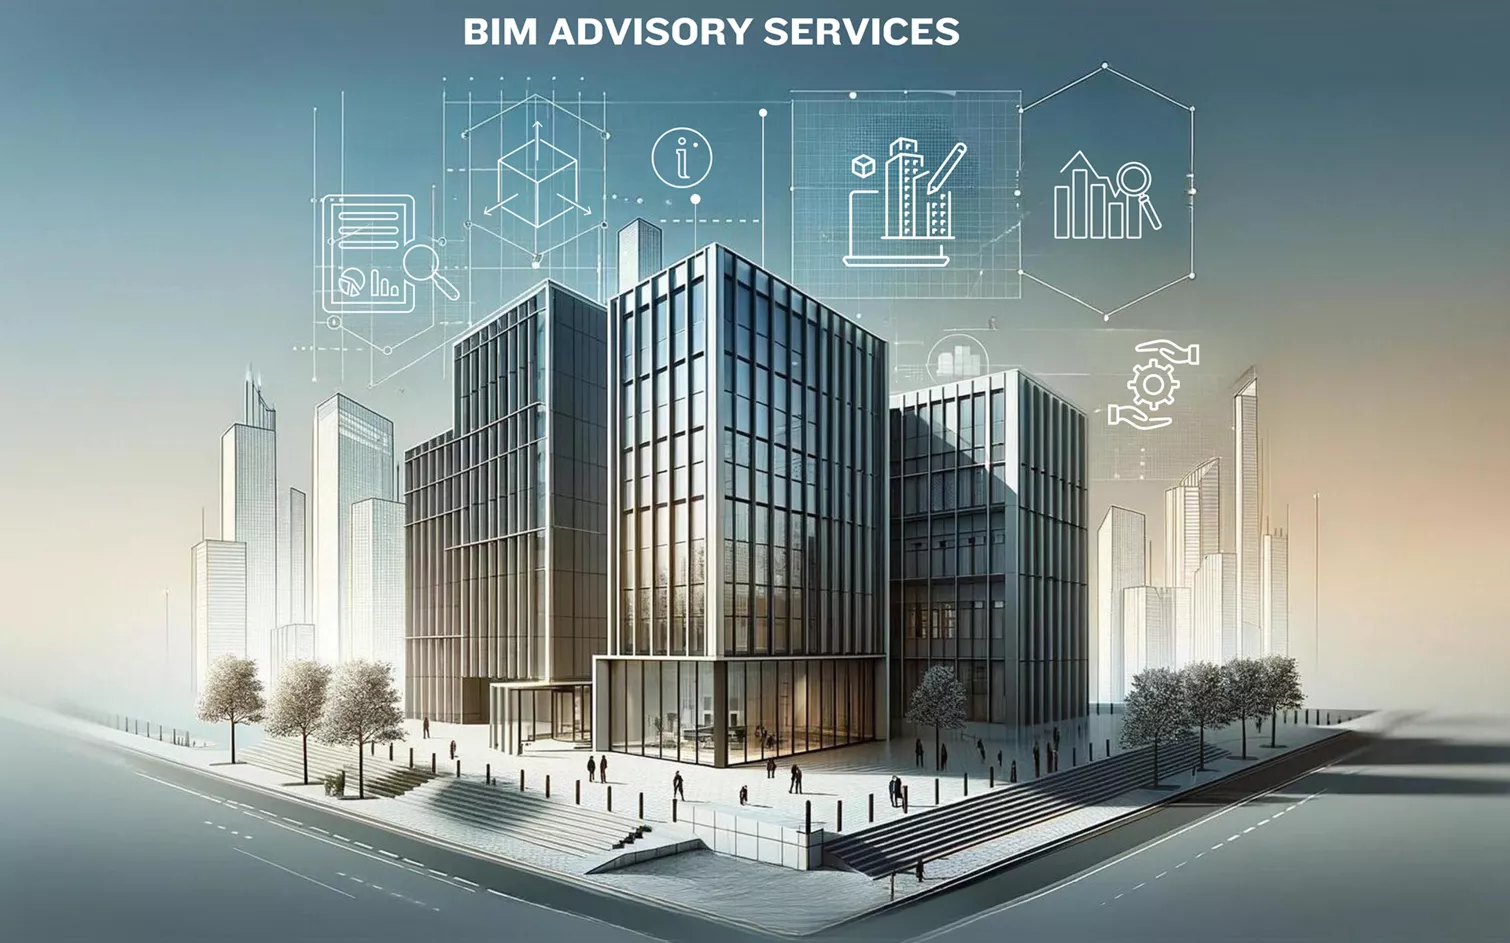 BIM Advisory Services